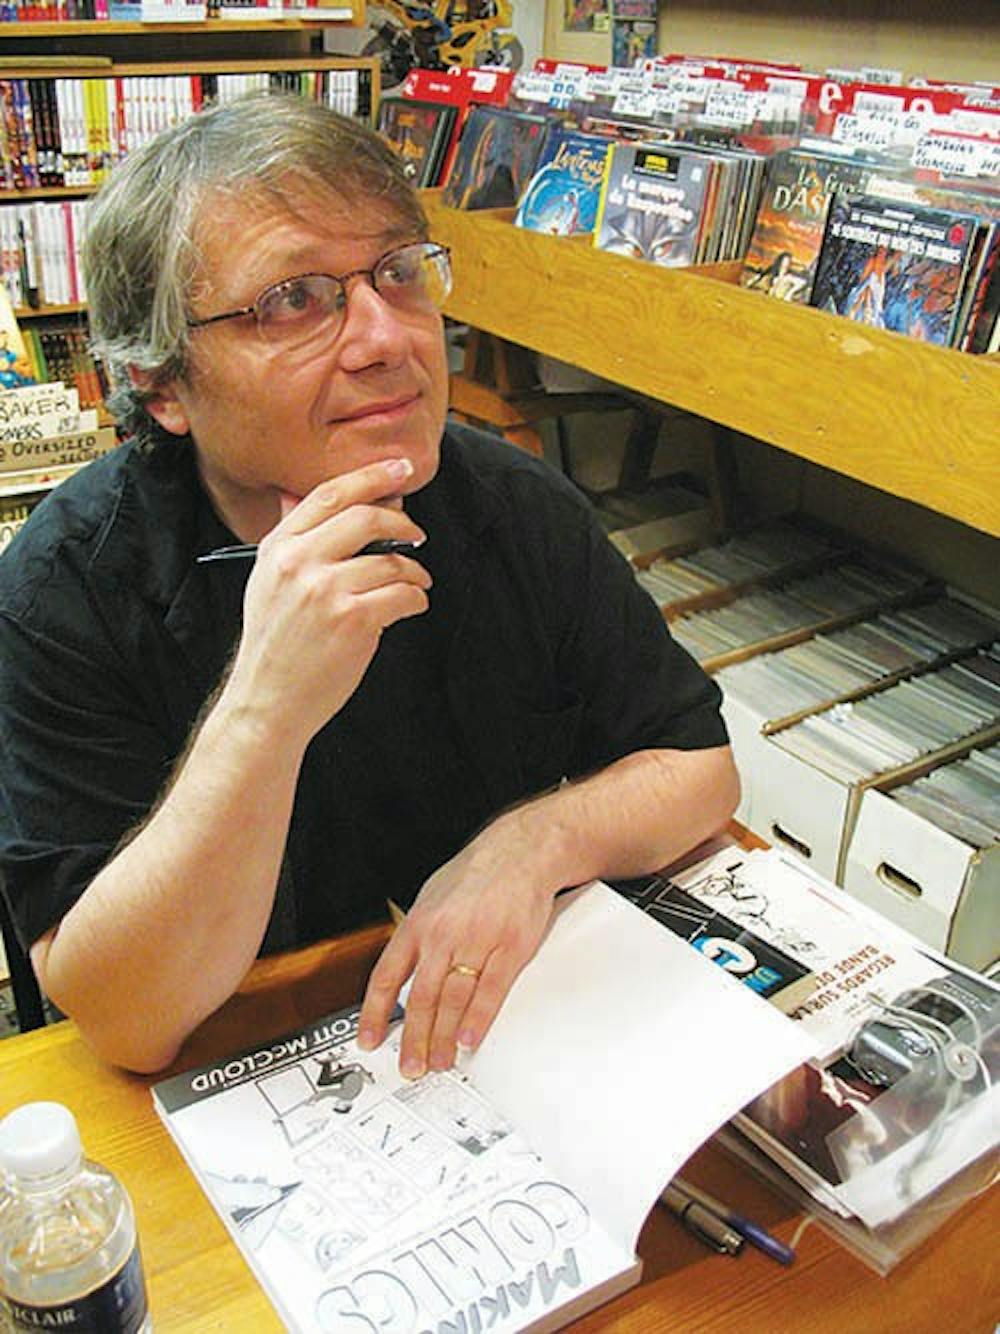 Comic book author and artist Scott McCloud signs a fan